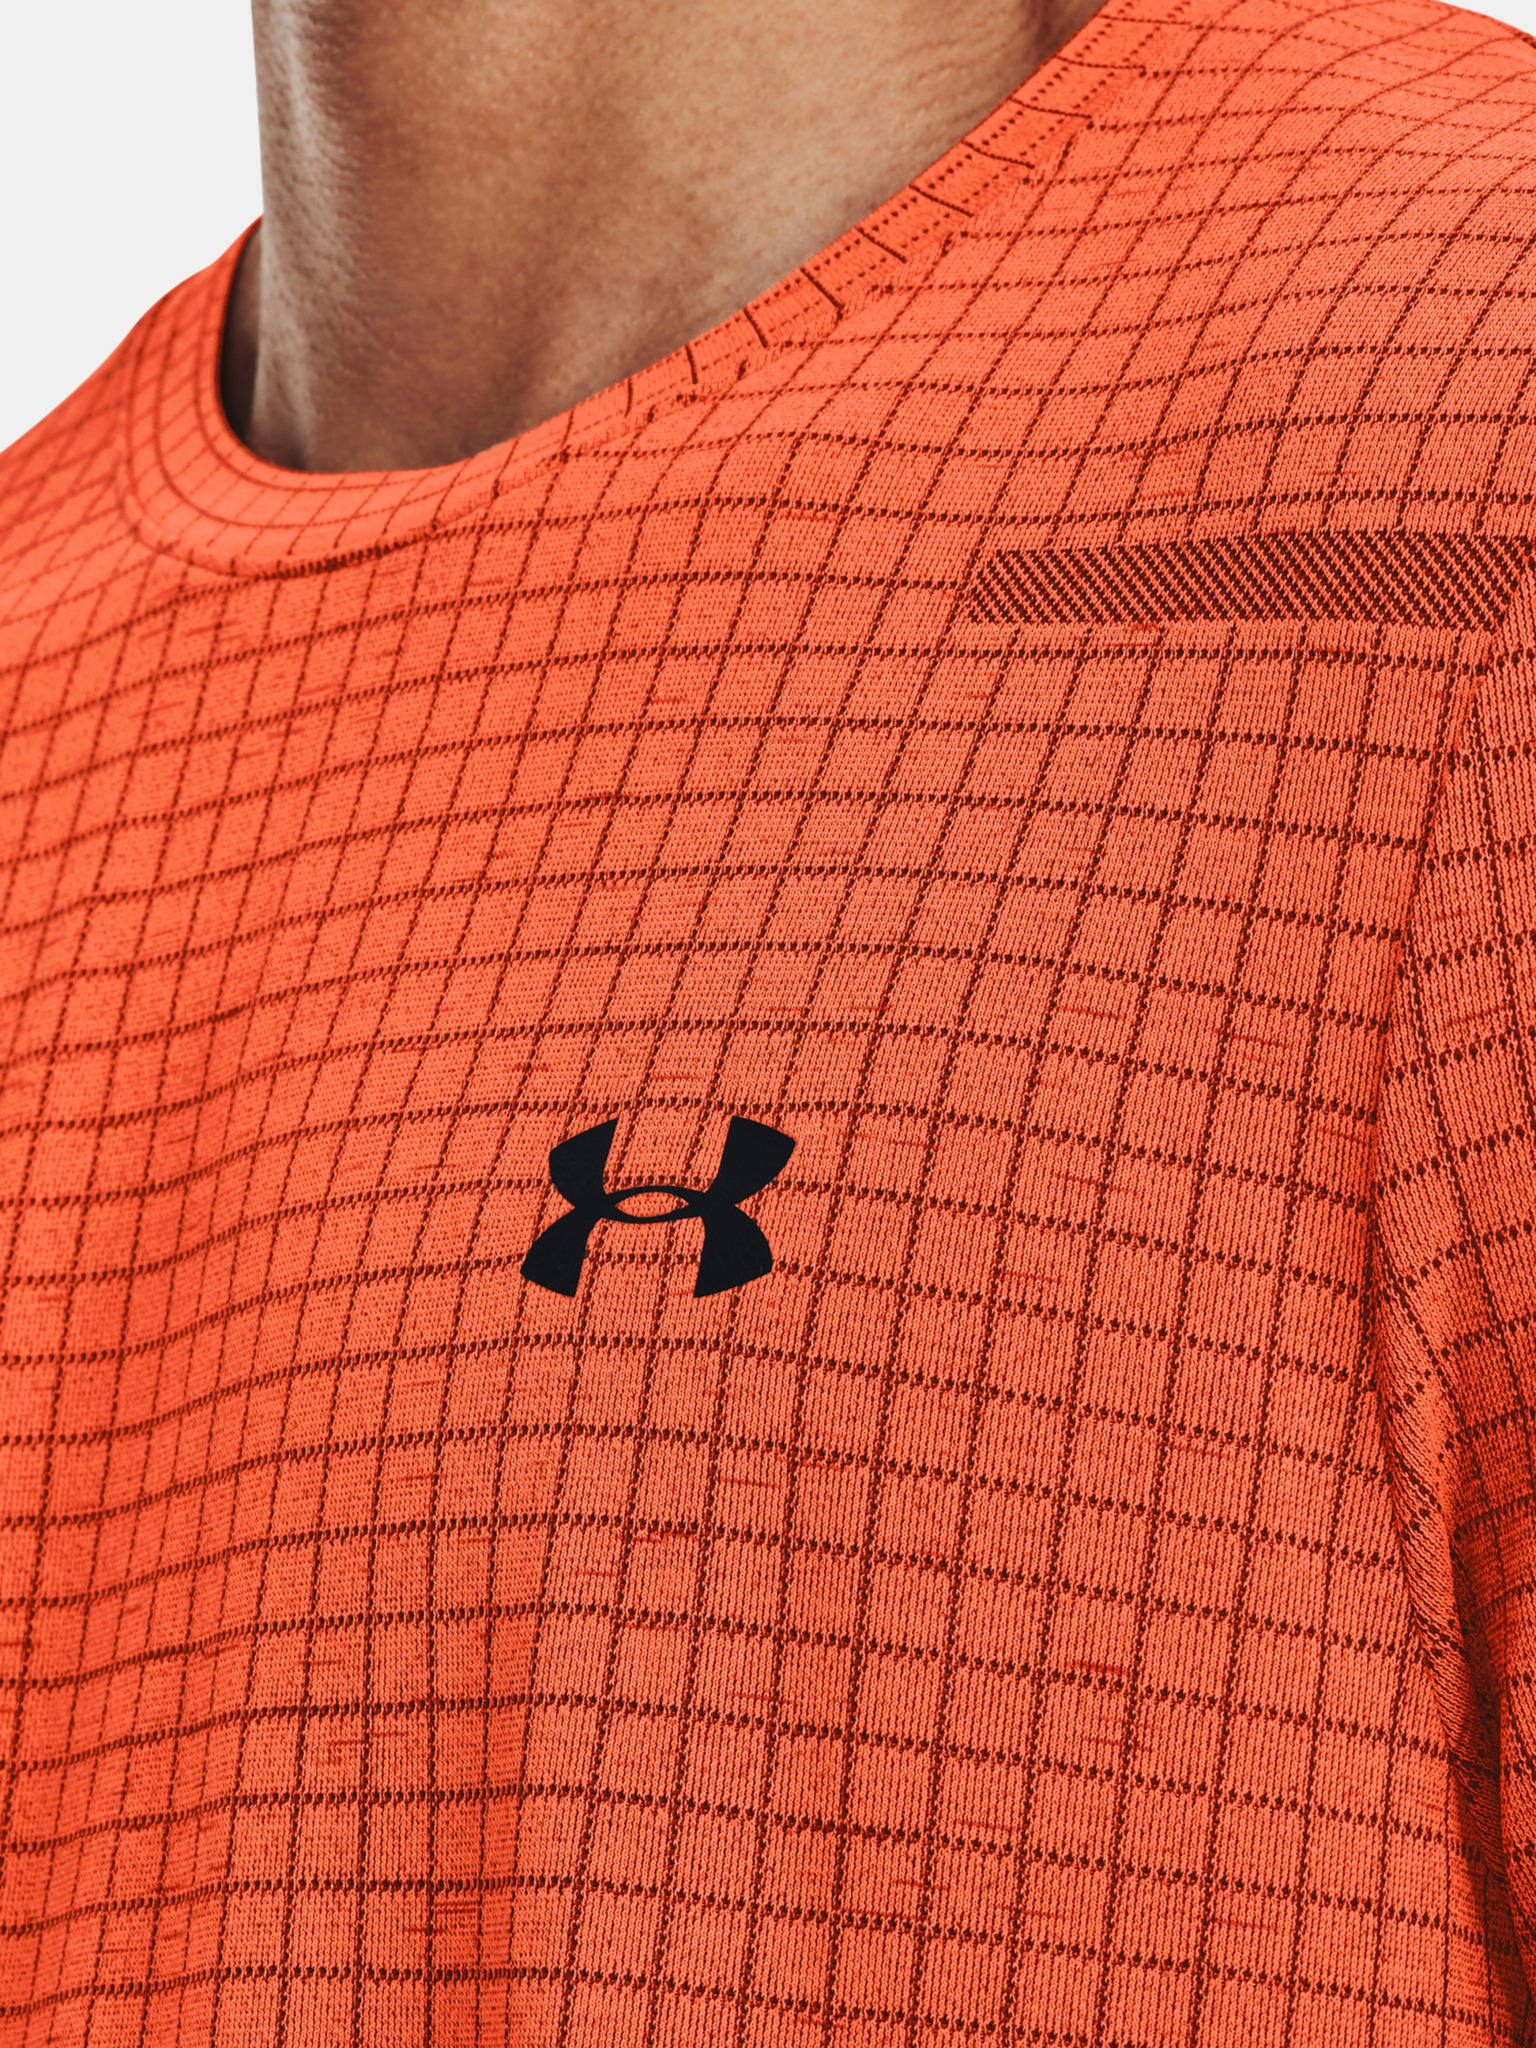 Men's UA Seamless Grid Short Sleeve